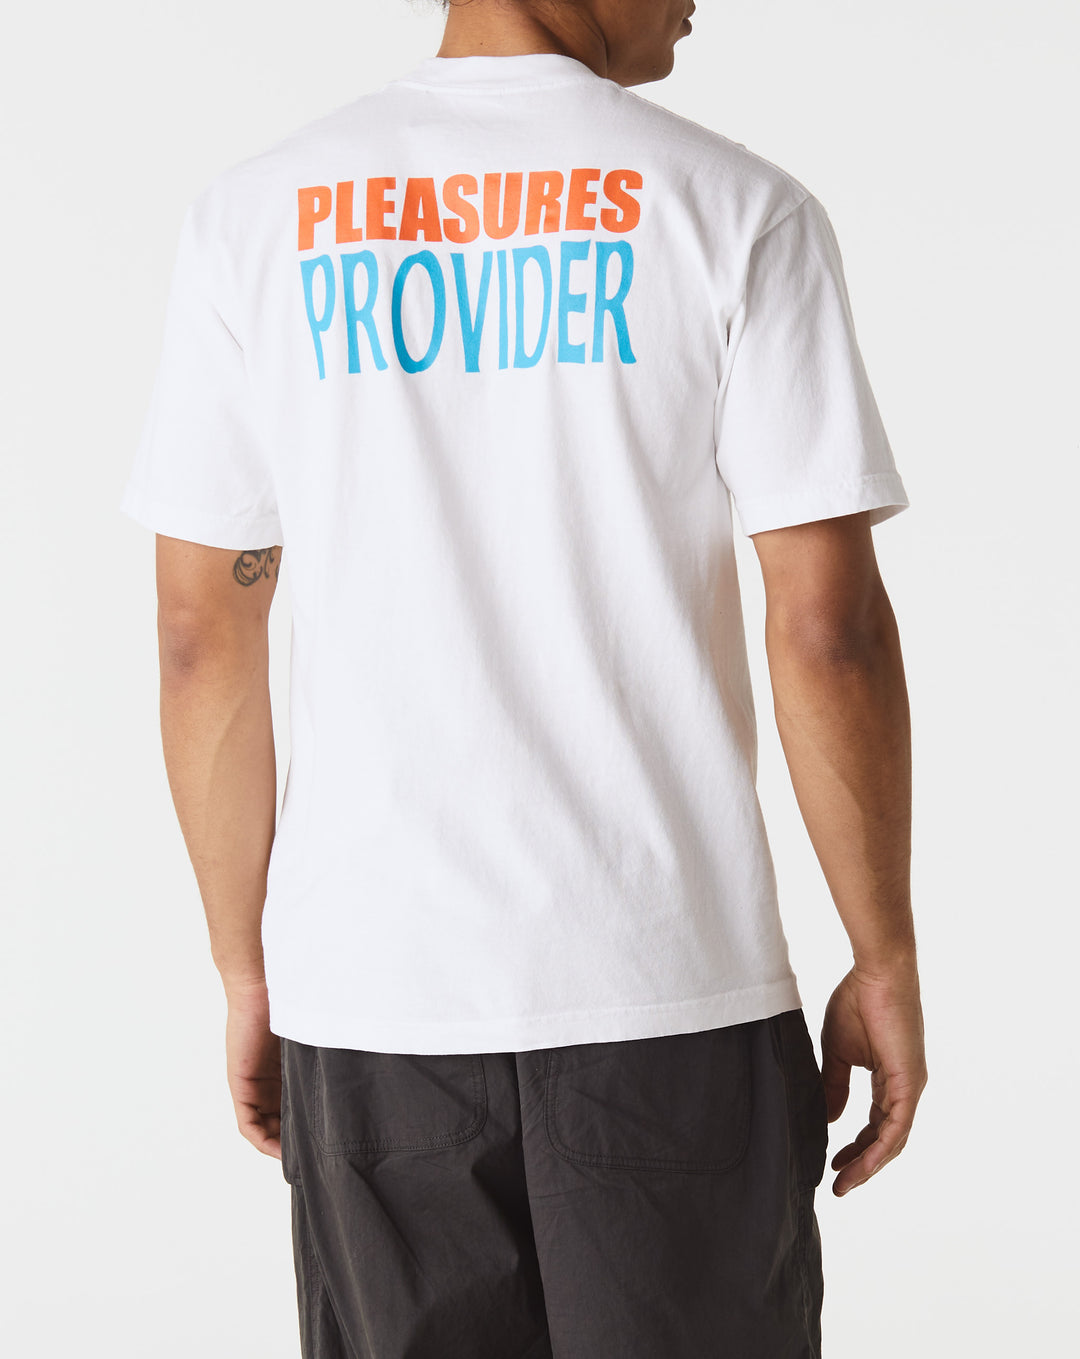 Pleasures N.E.R.D. x Provider T-Shirt  - XHIBITION